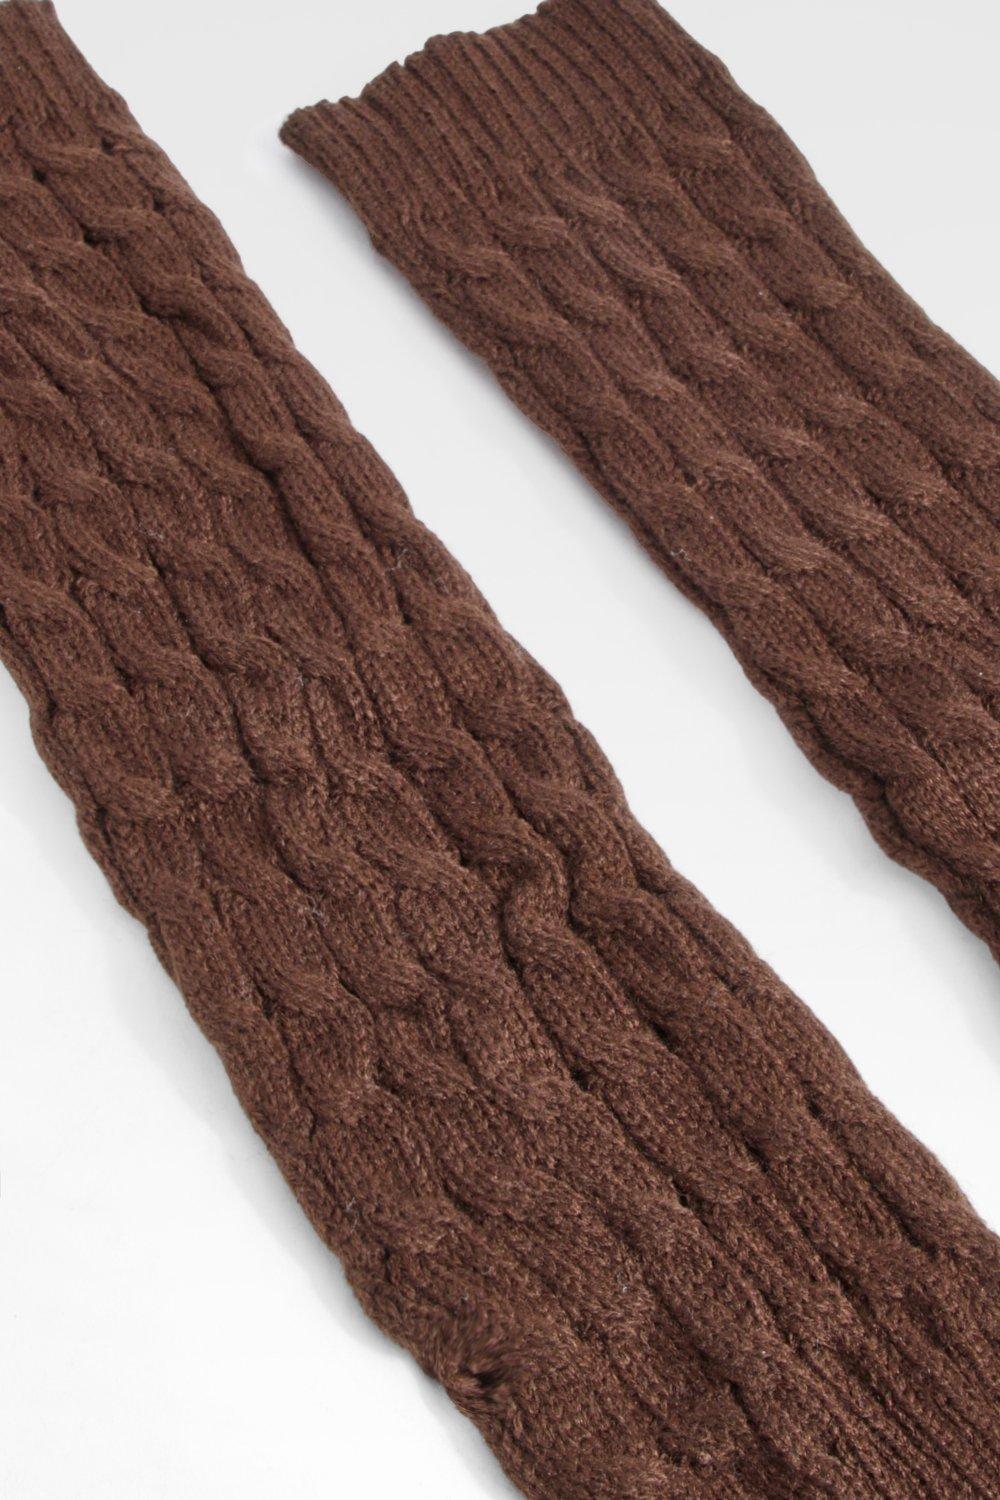 Buy Foot Traffic Women's Cable-Knit Leg Warmers, Warm & Long